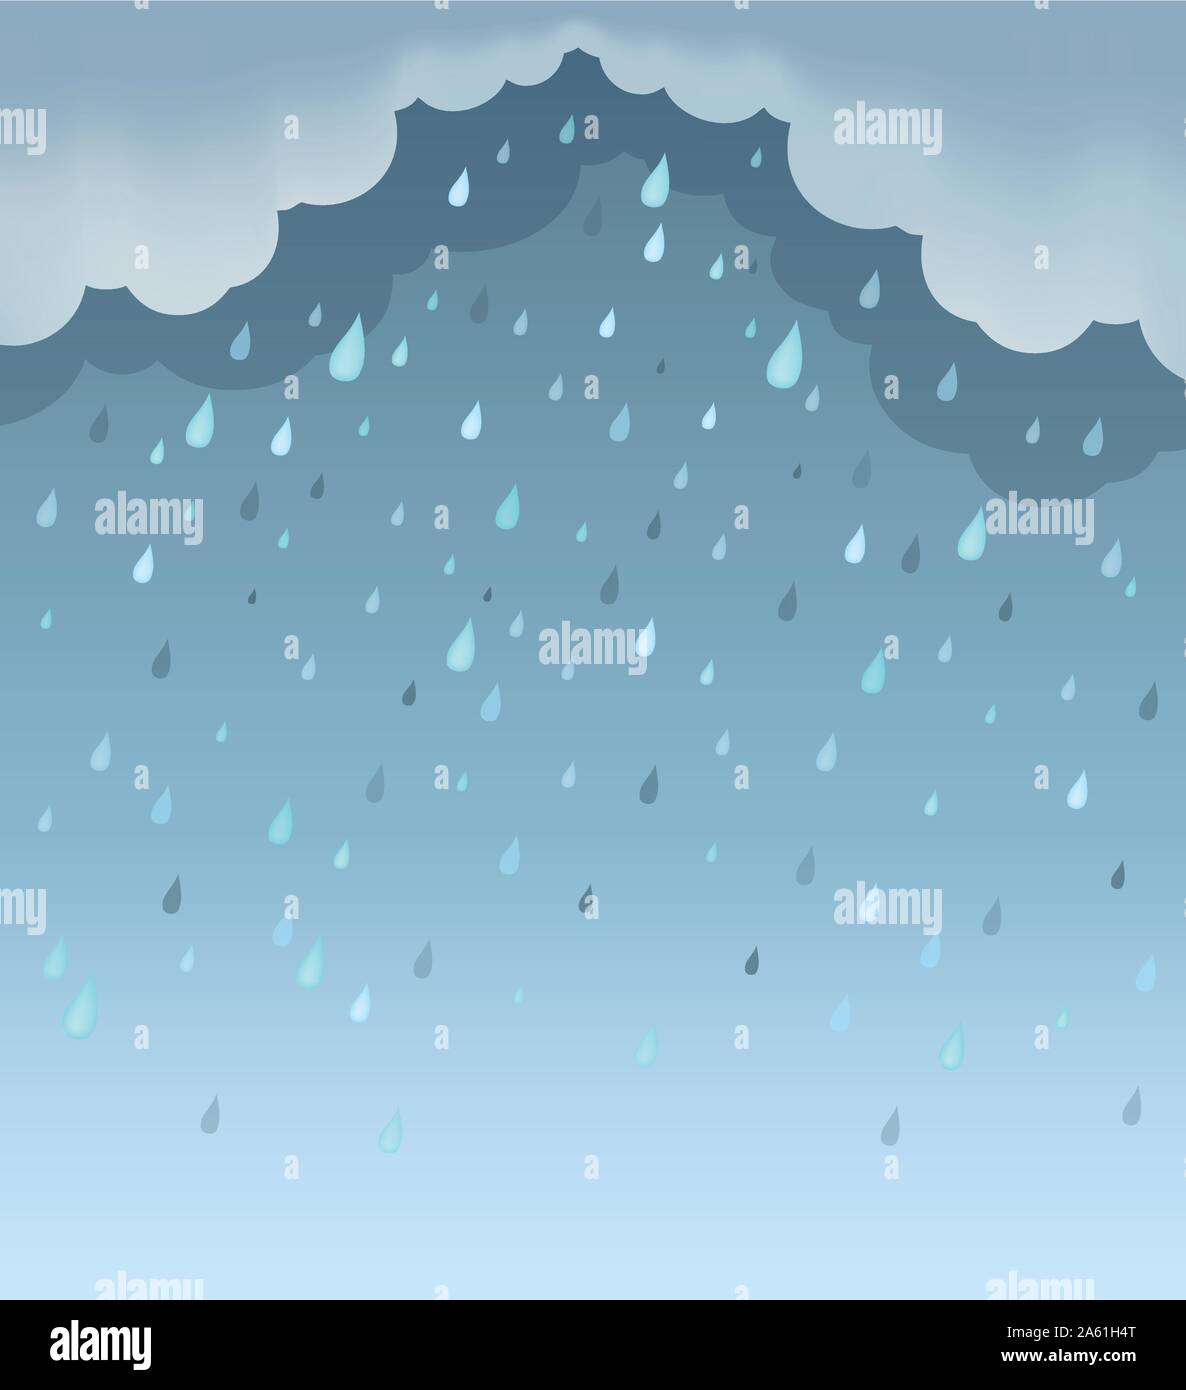 Rainy weather theme background 1 - eps10 vector illustration. Stock Vector